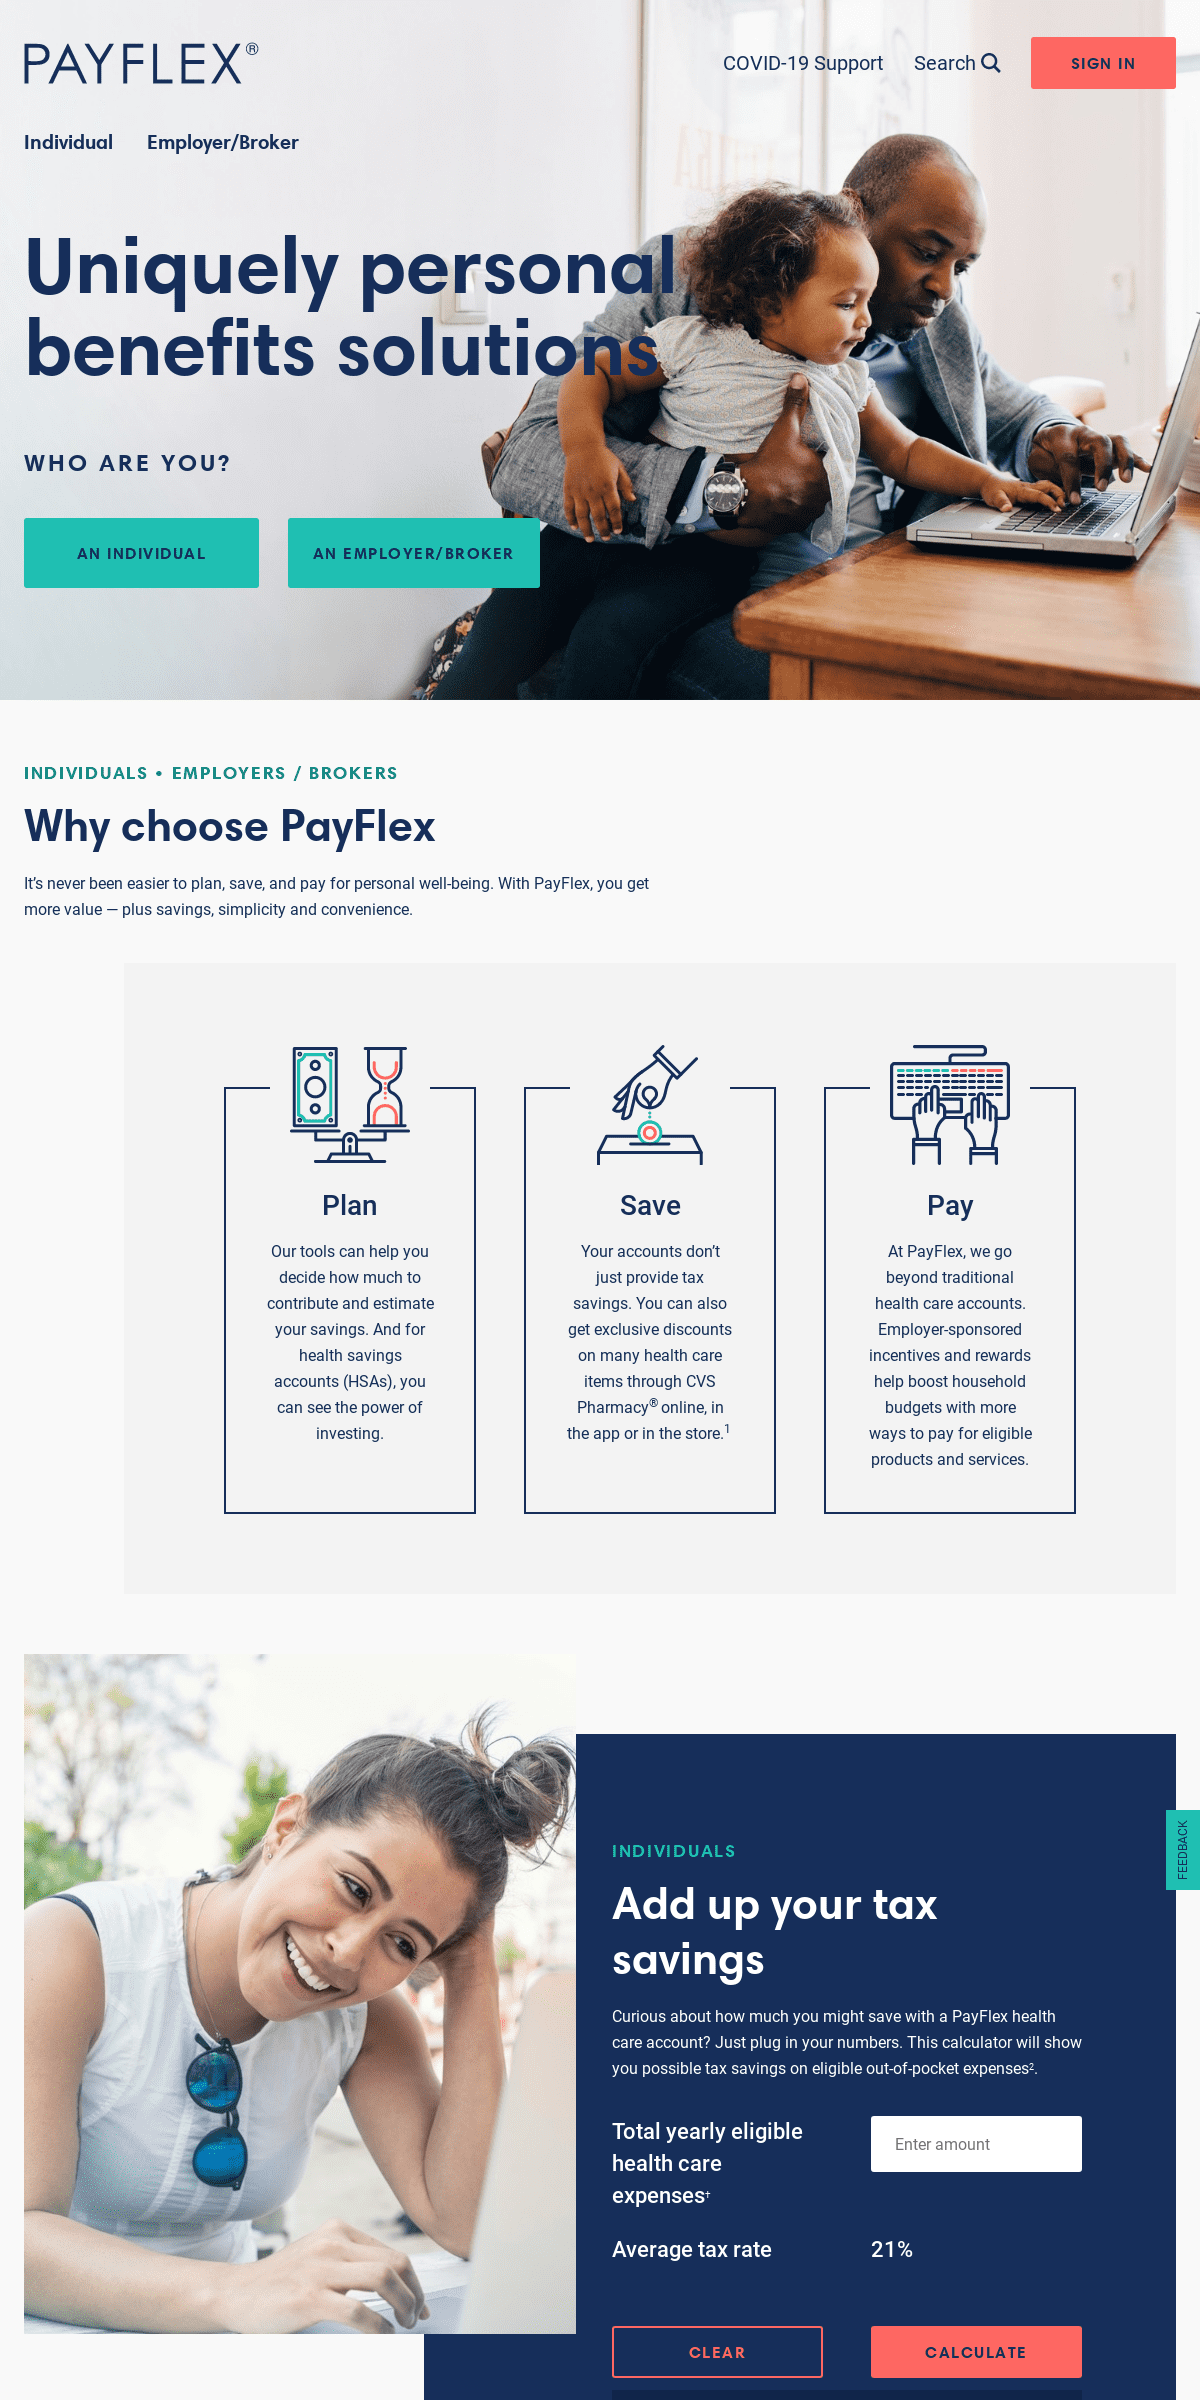 A complete backup of payflex.com